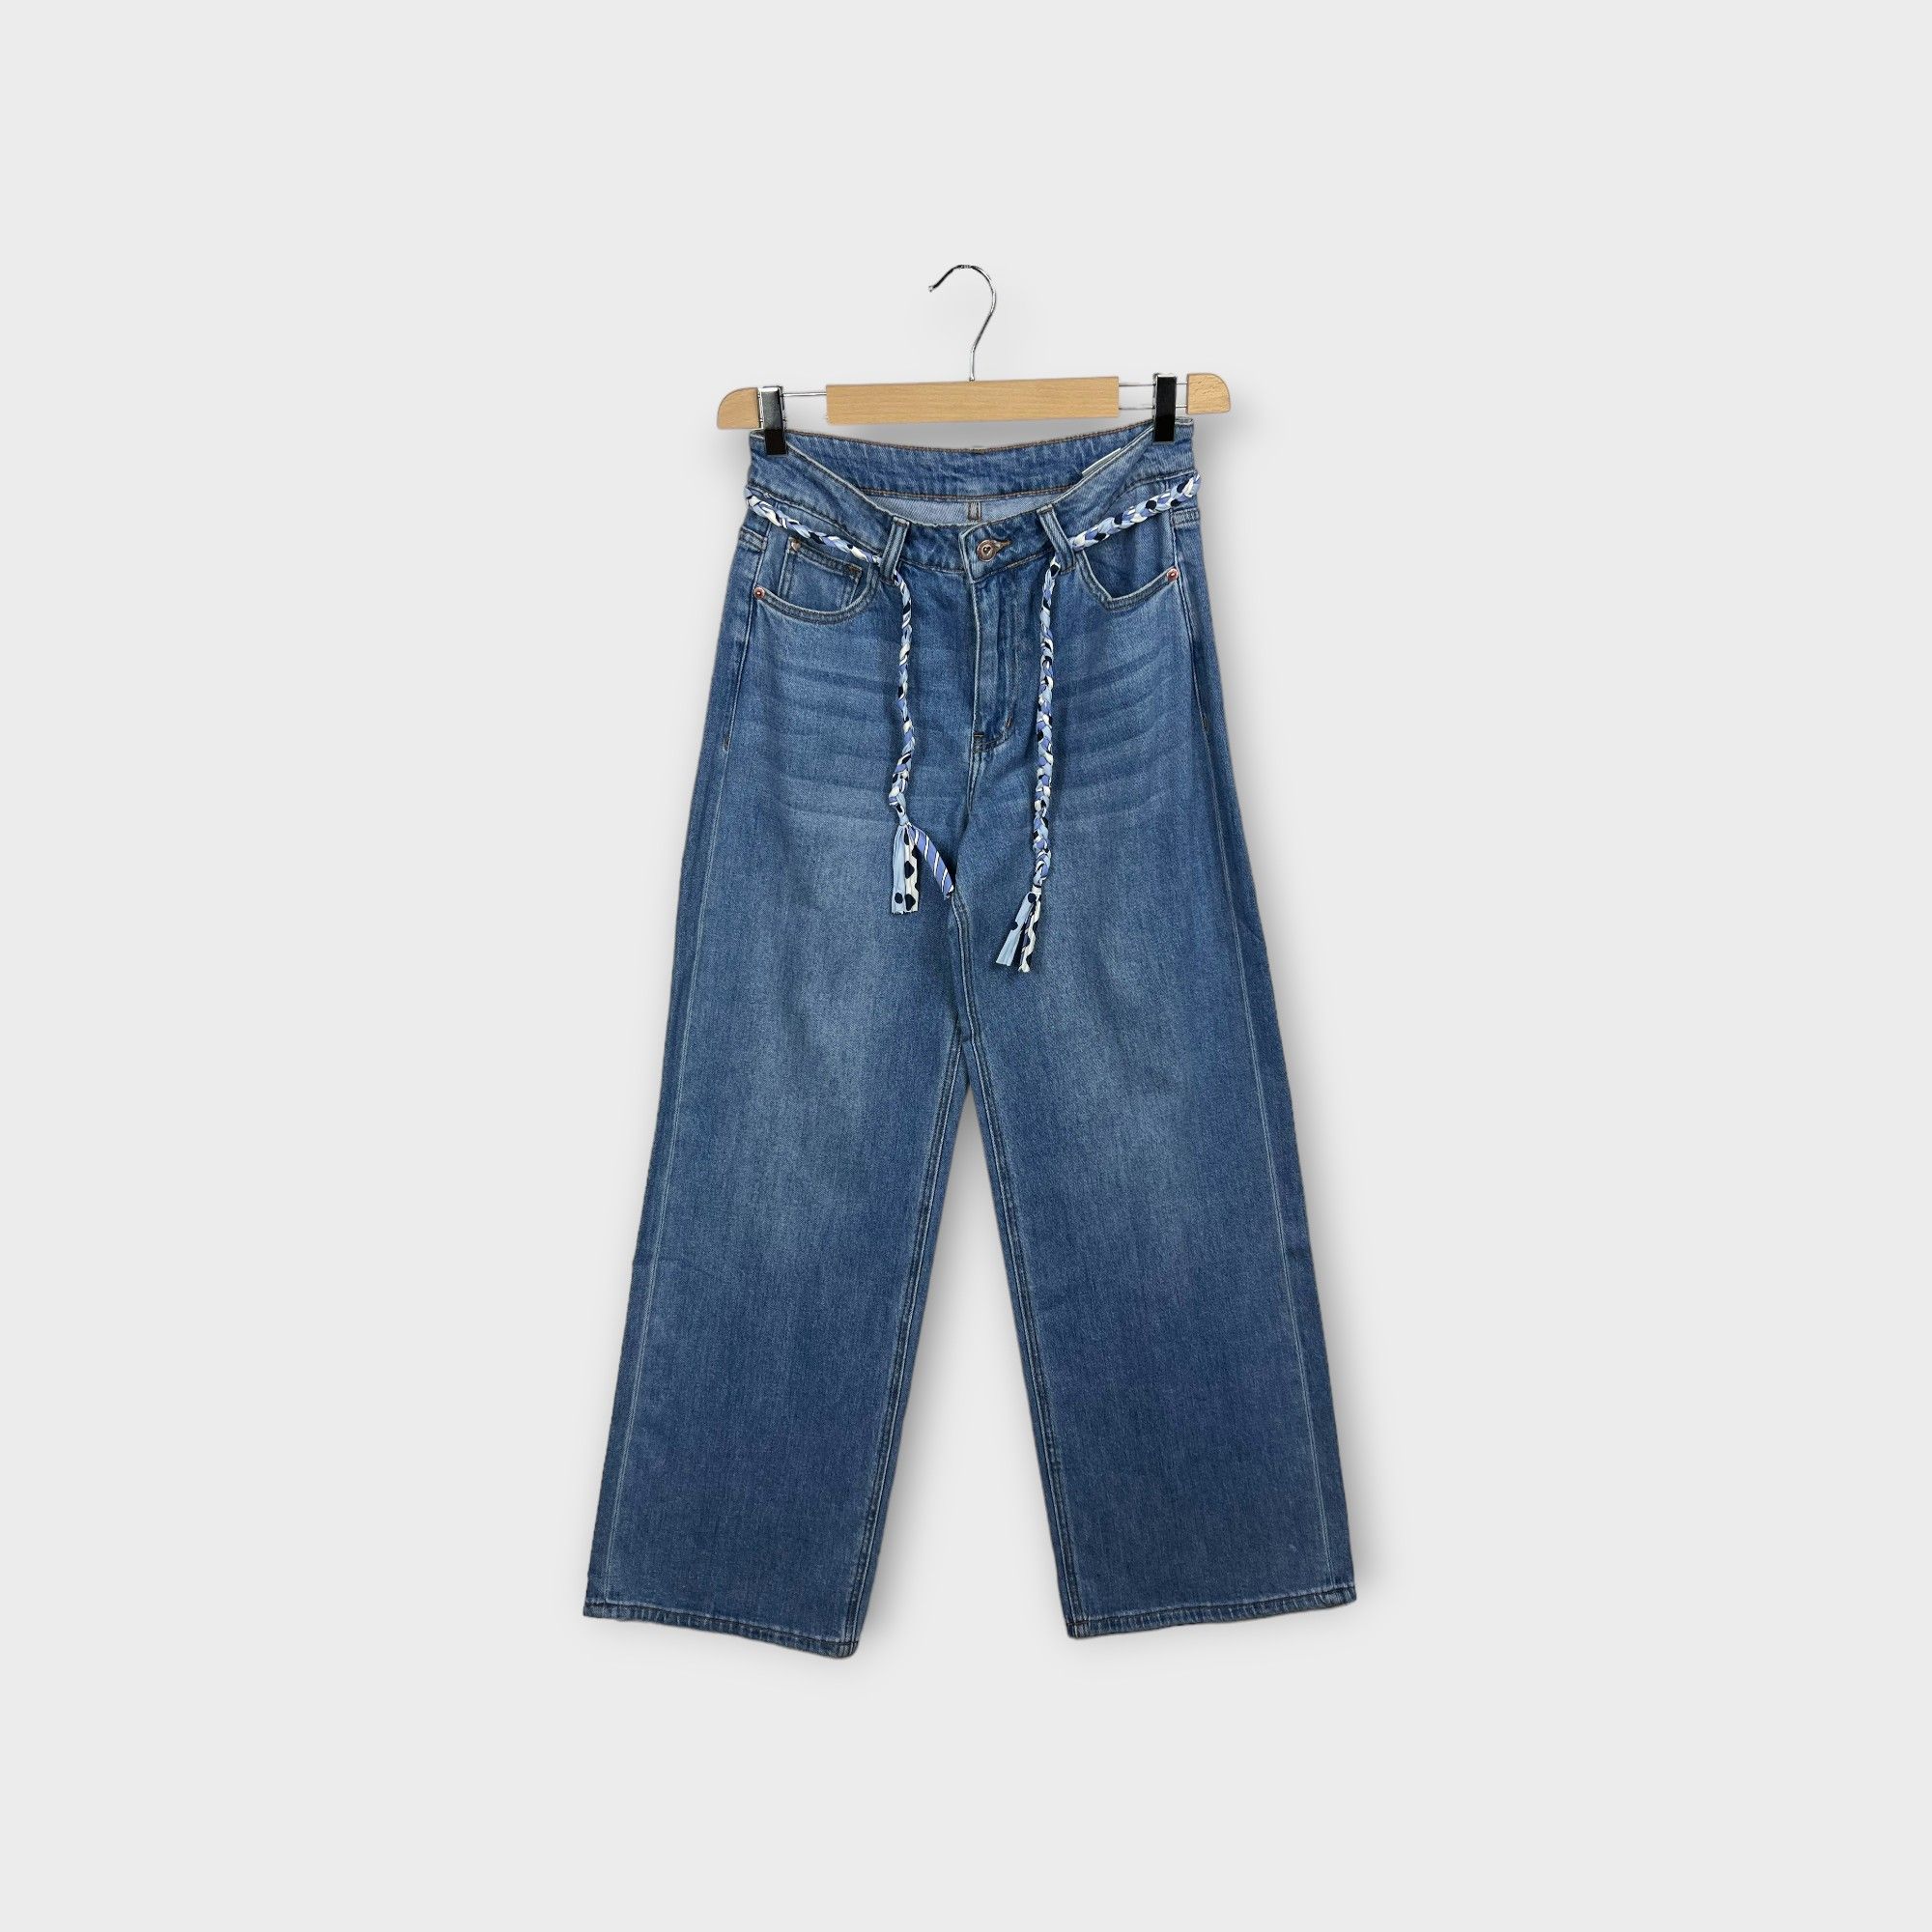 HELLEH - Pantaloni cinque tasche a palazzo in tela di jeans